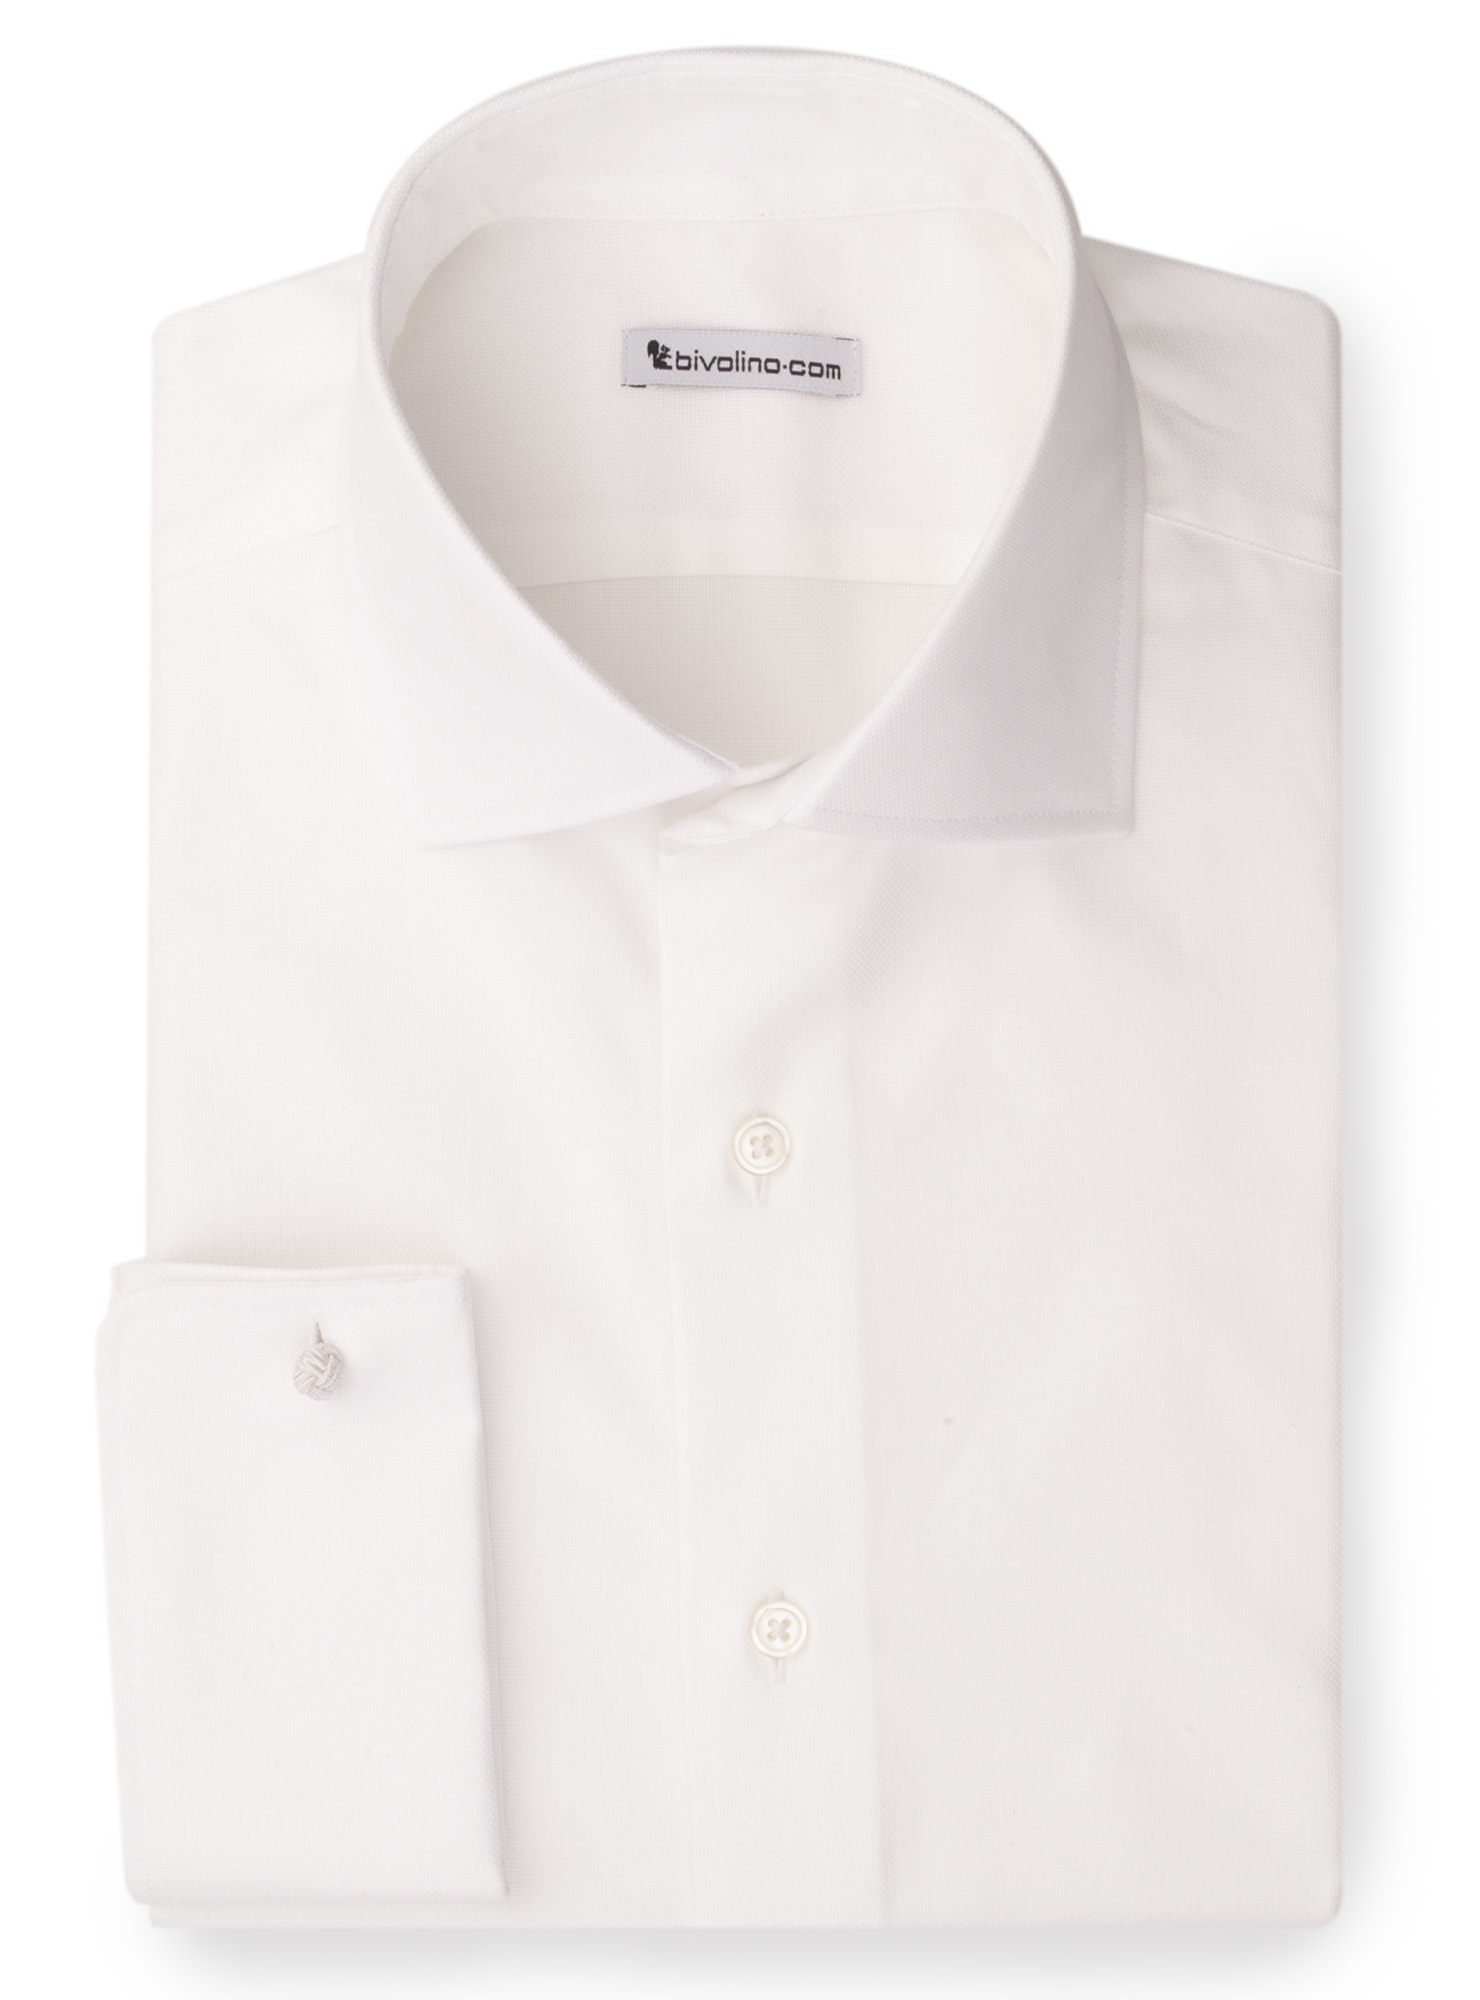 LOROCOTTA -  white royal oxford shirt - Laba 2 Clifton